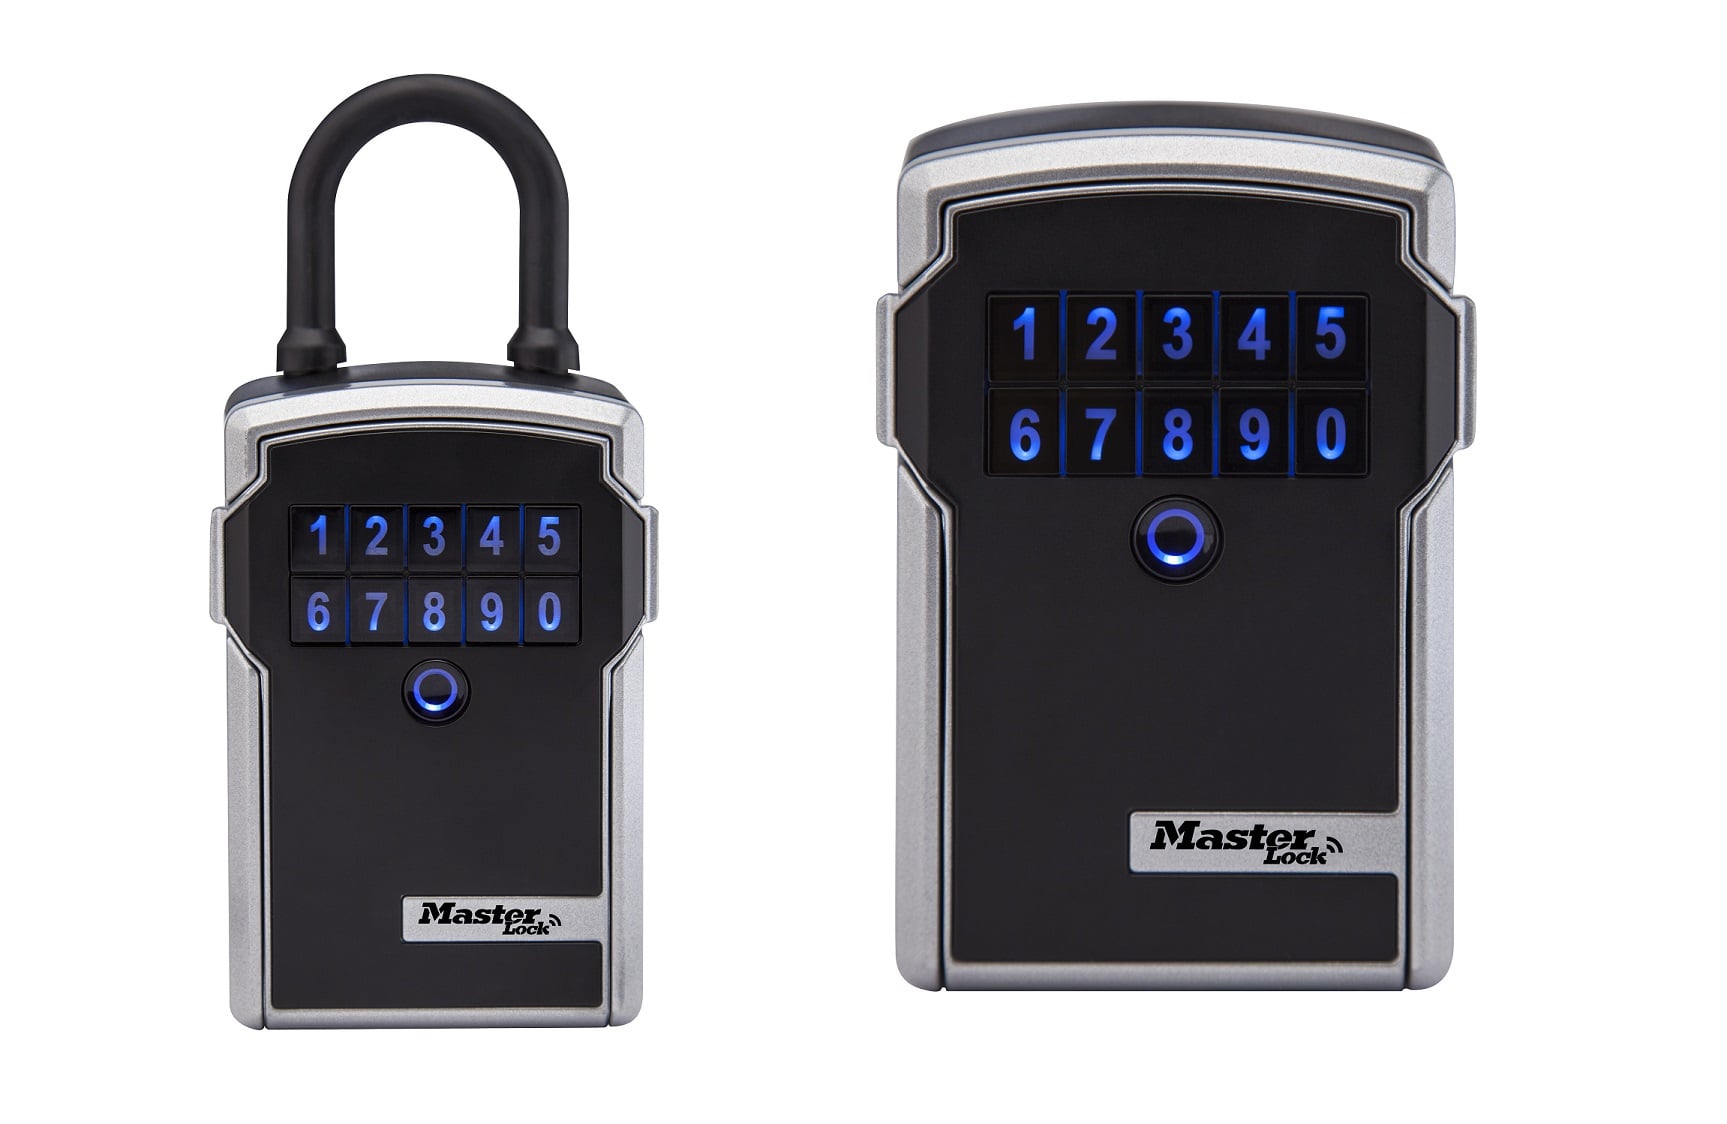 Master Lock Announces New Bluetooth Lock Boxes